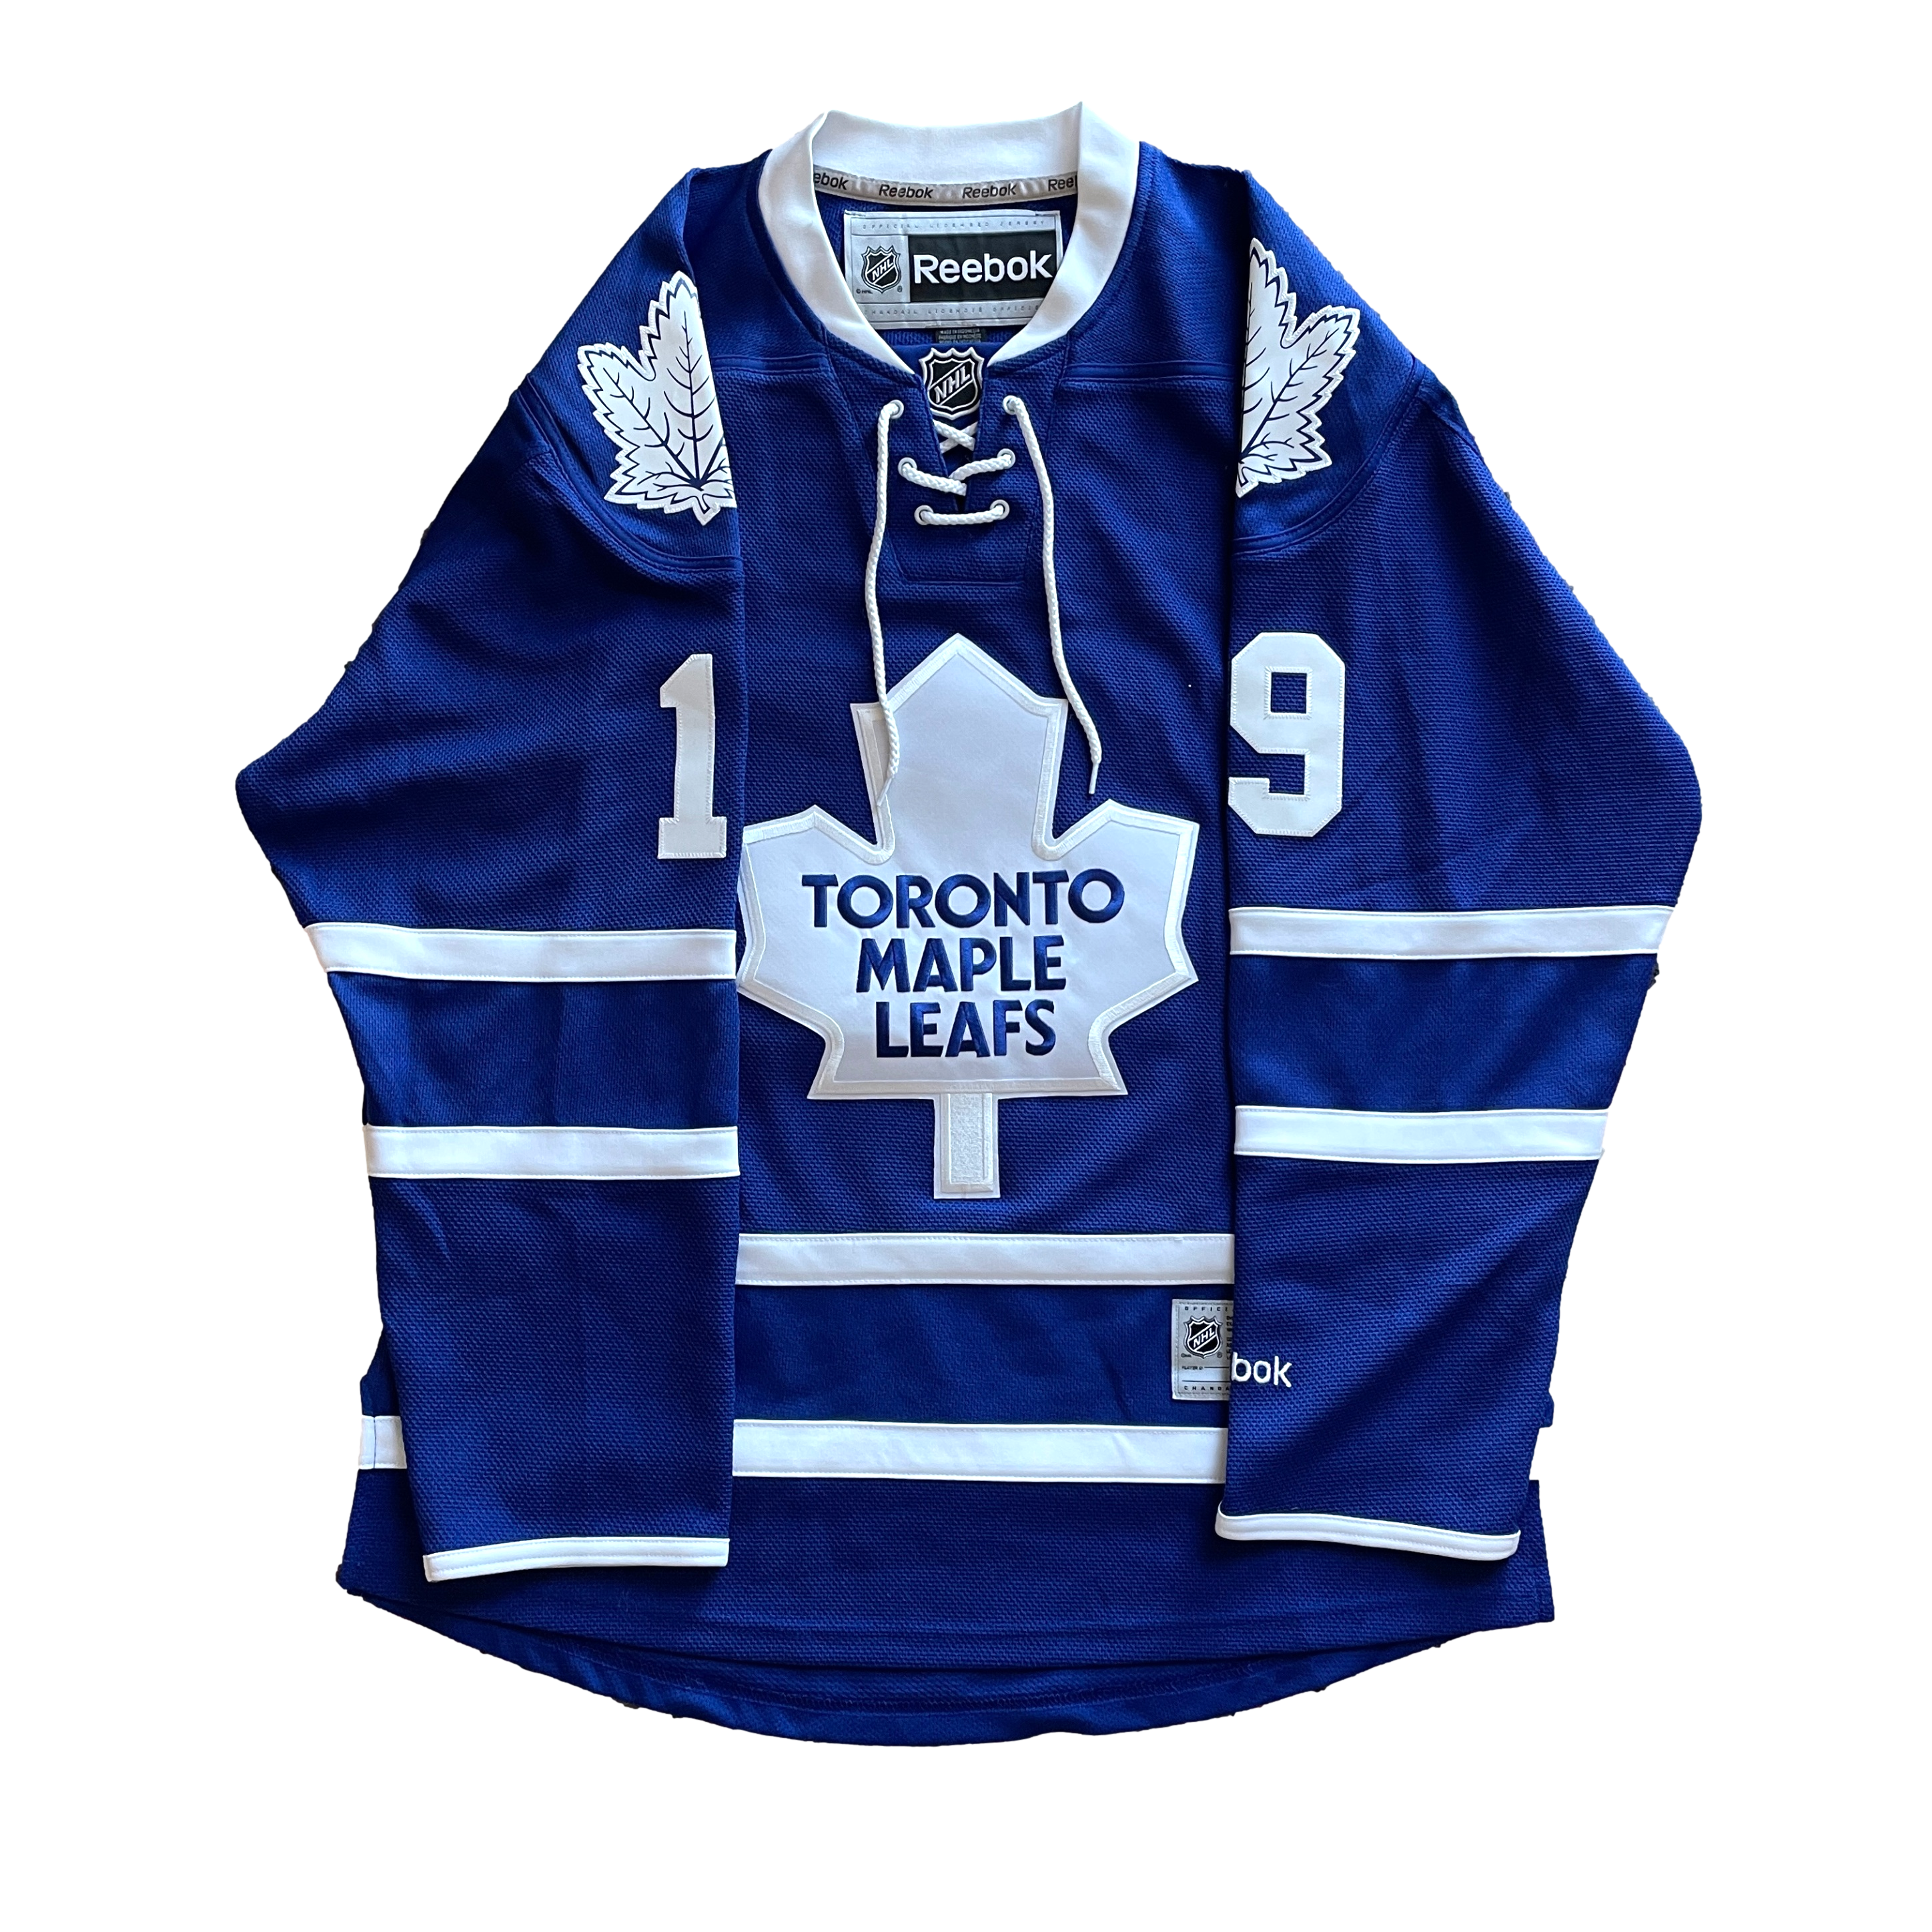 Toronto Maple Leafs NHL Hockey Jersey (S)